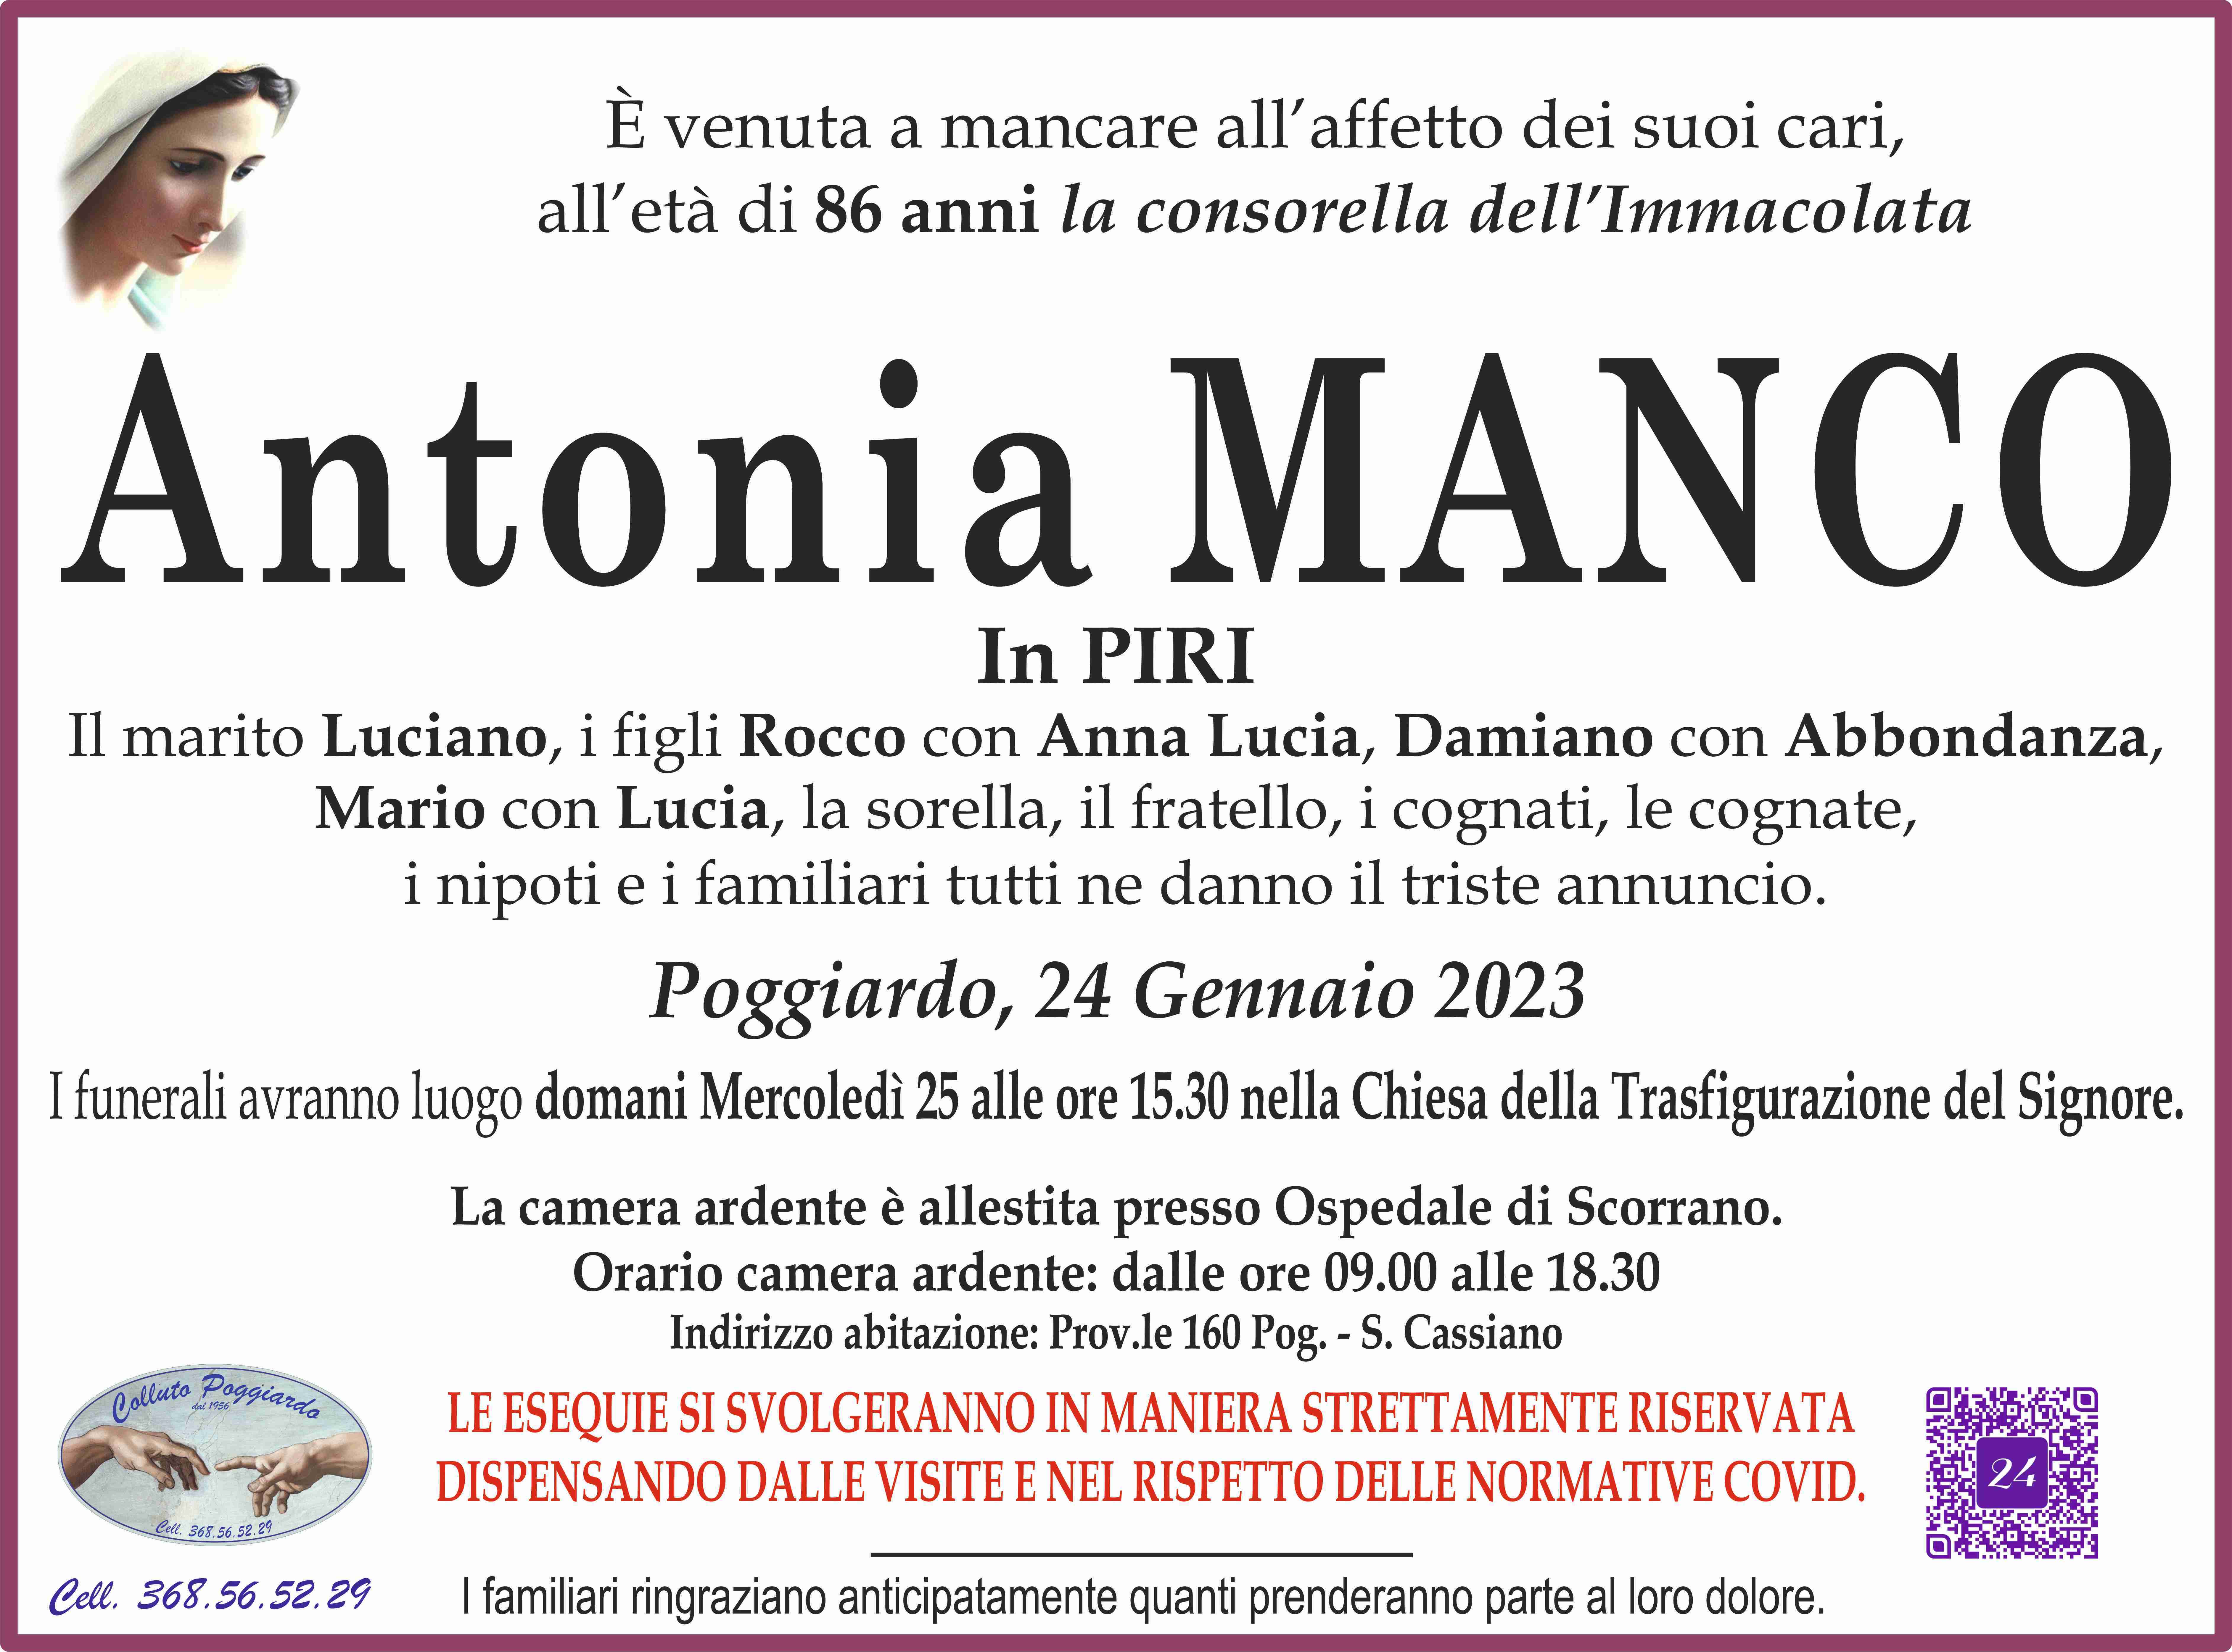 Antonia Manco